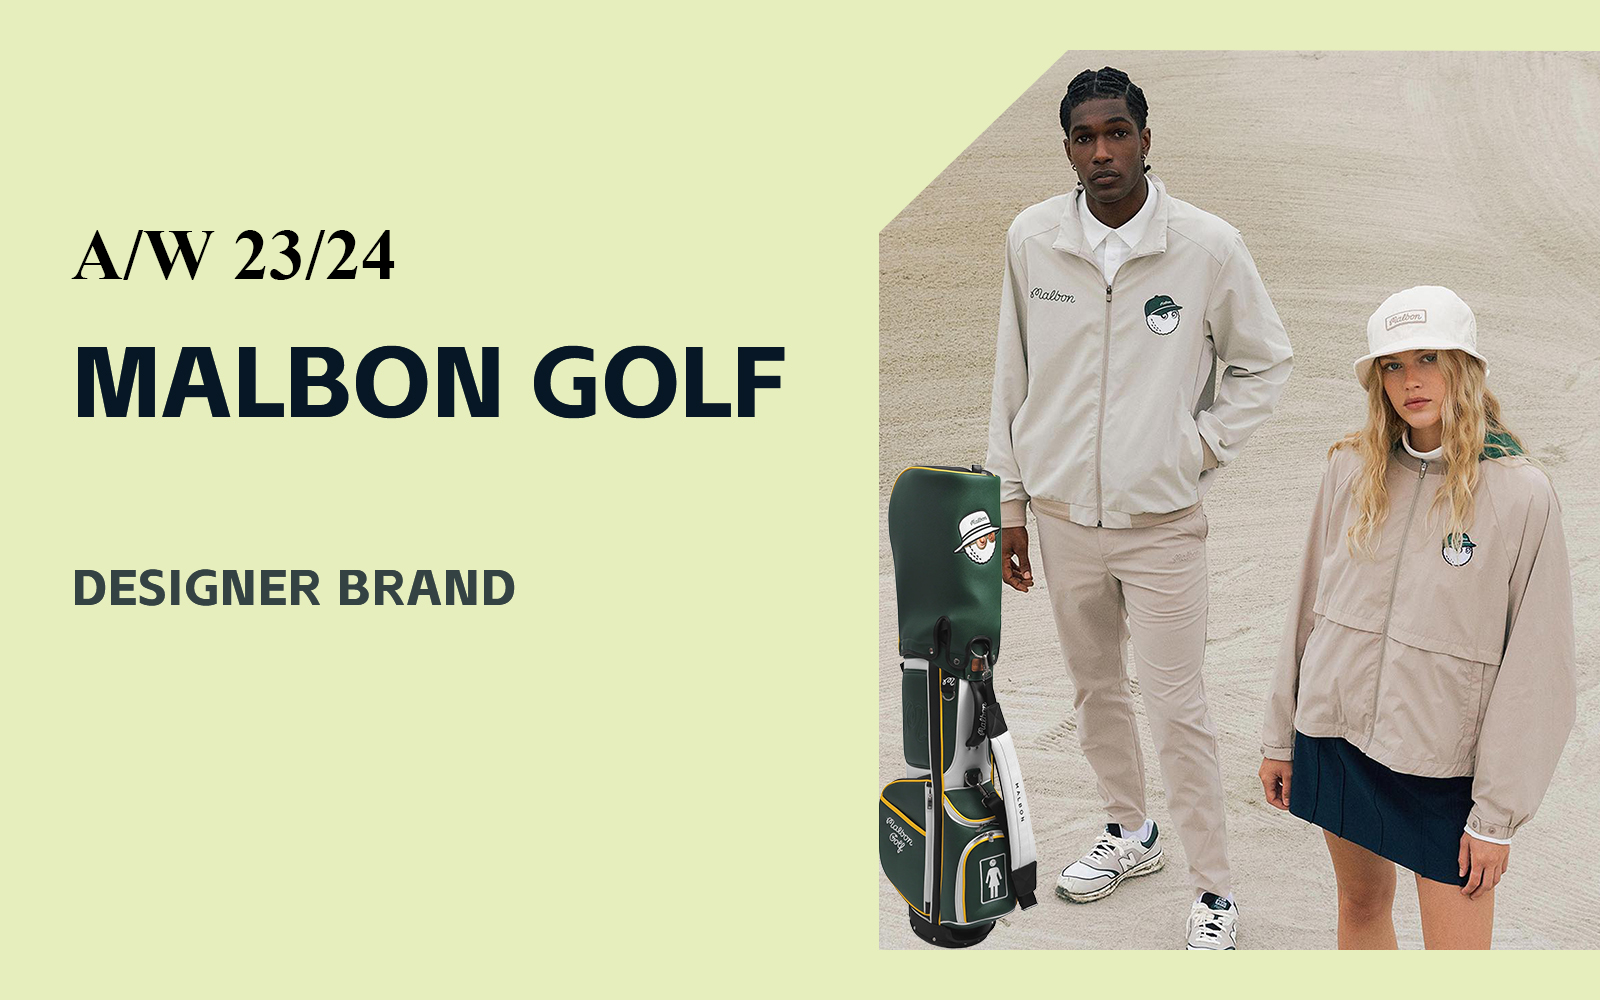 Leisure Retro - The Analysis of Malbon Golf The Activewear Designer Brand